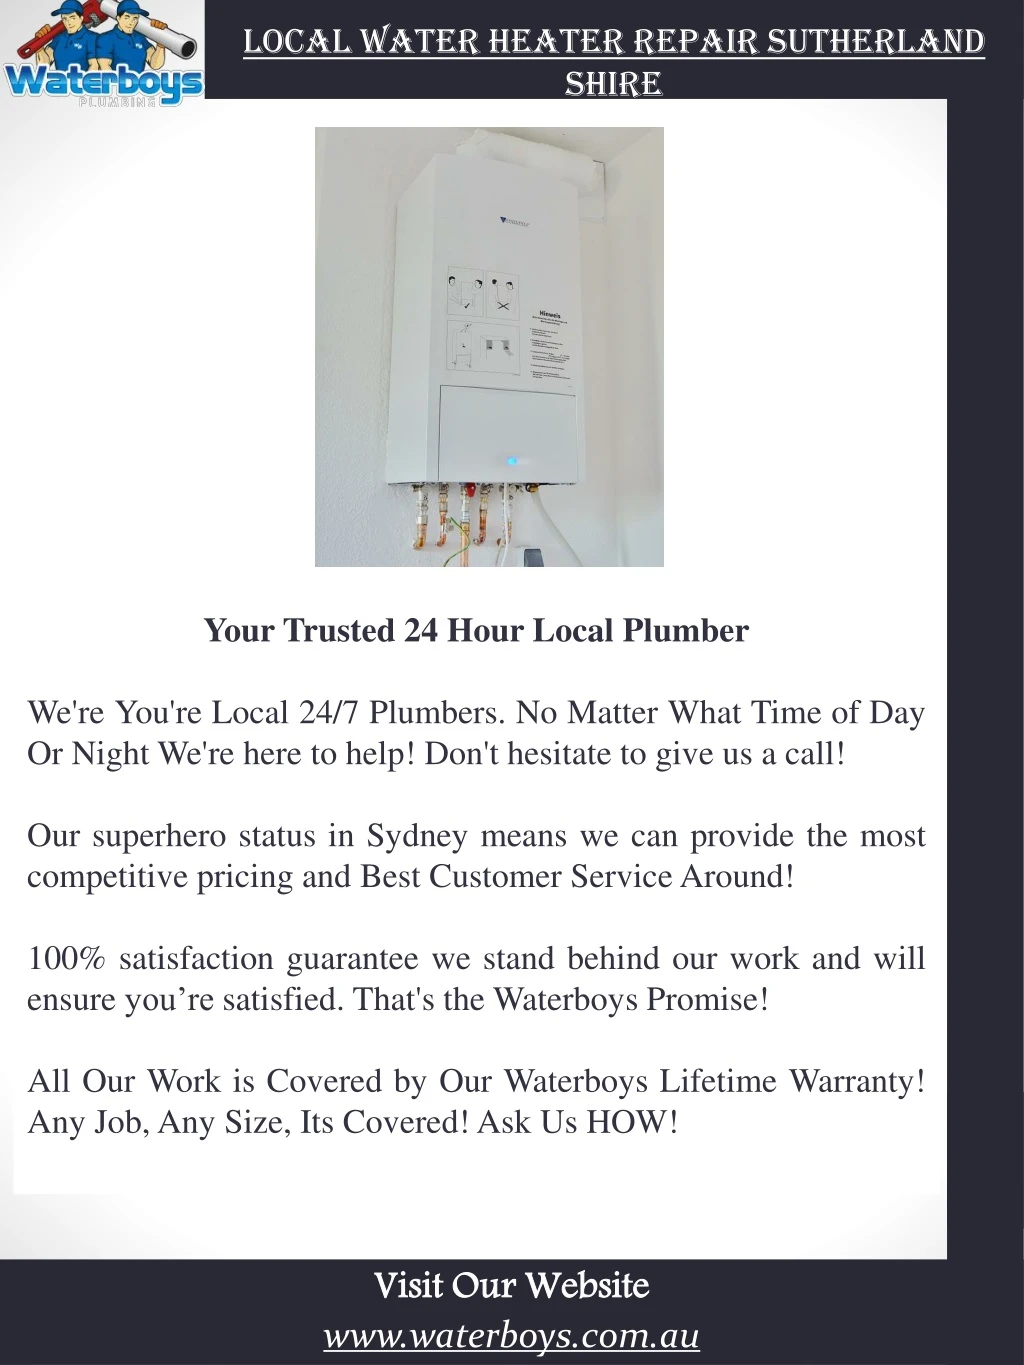 local water heater repair sutherland shire